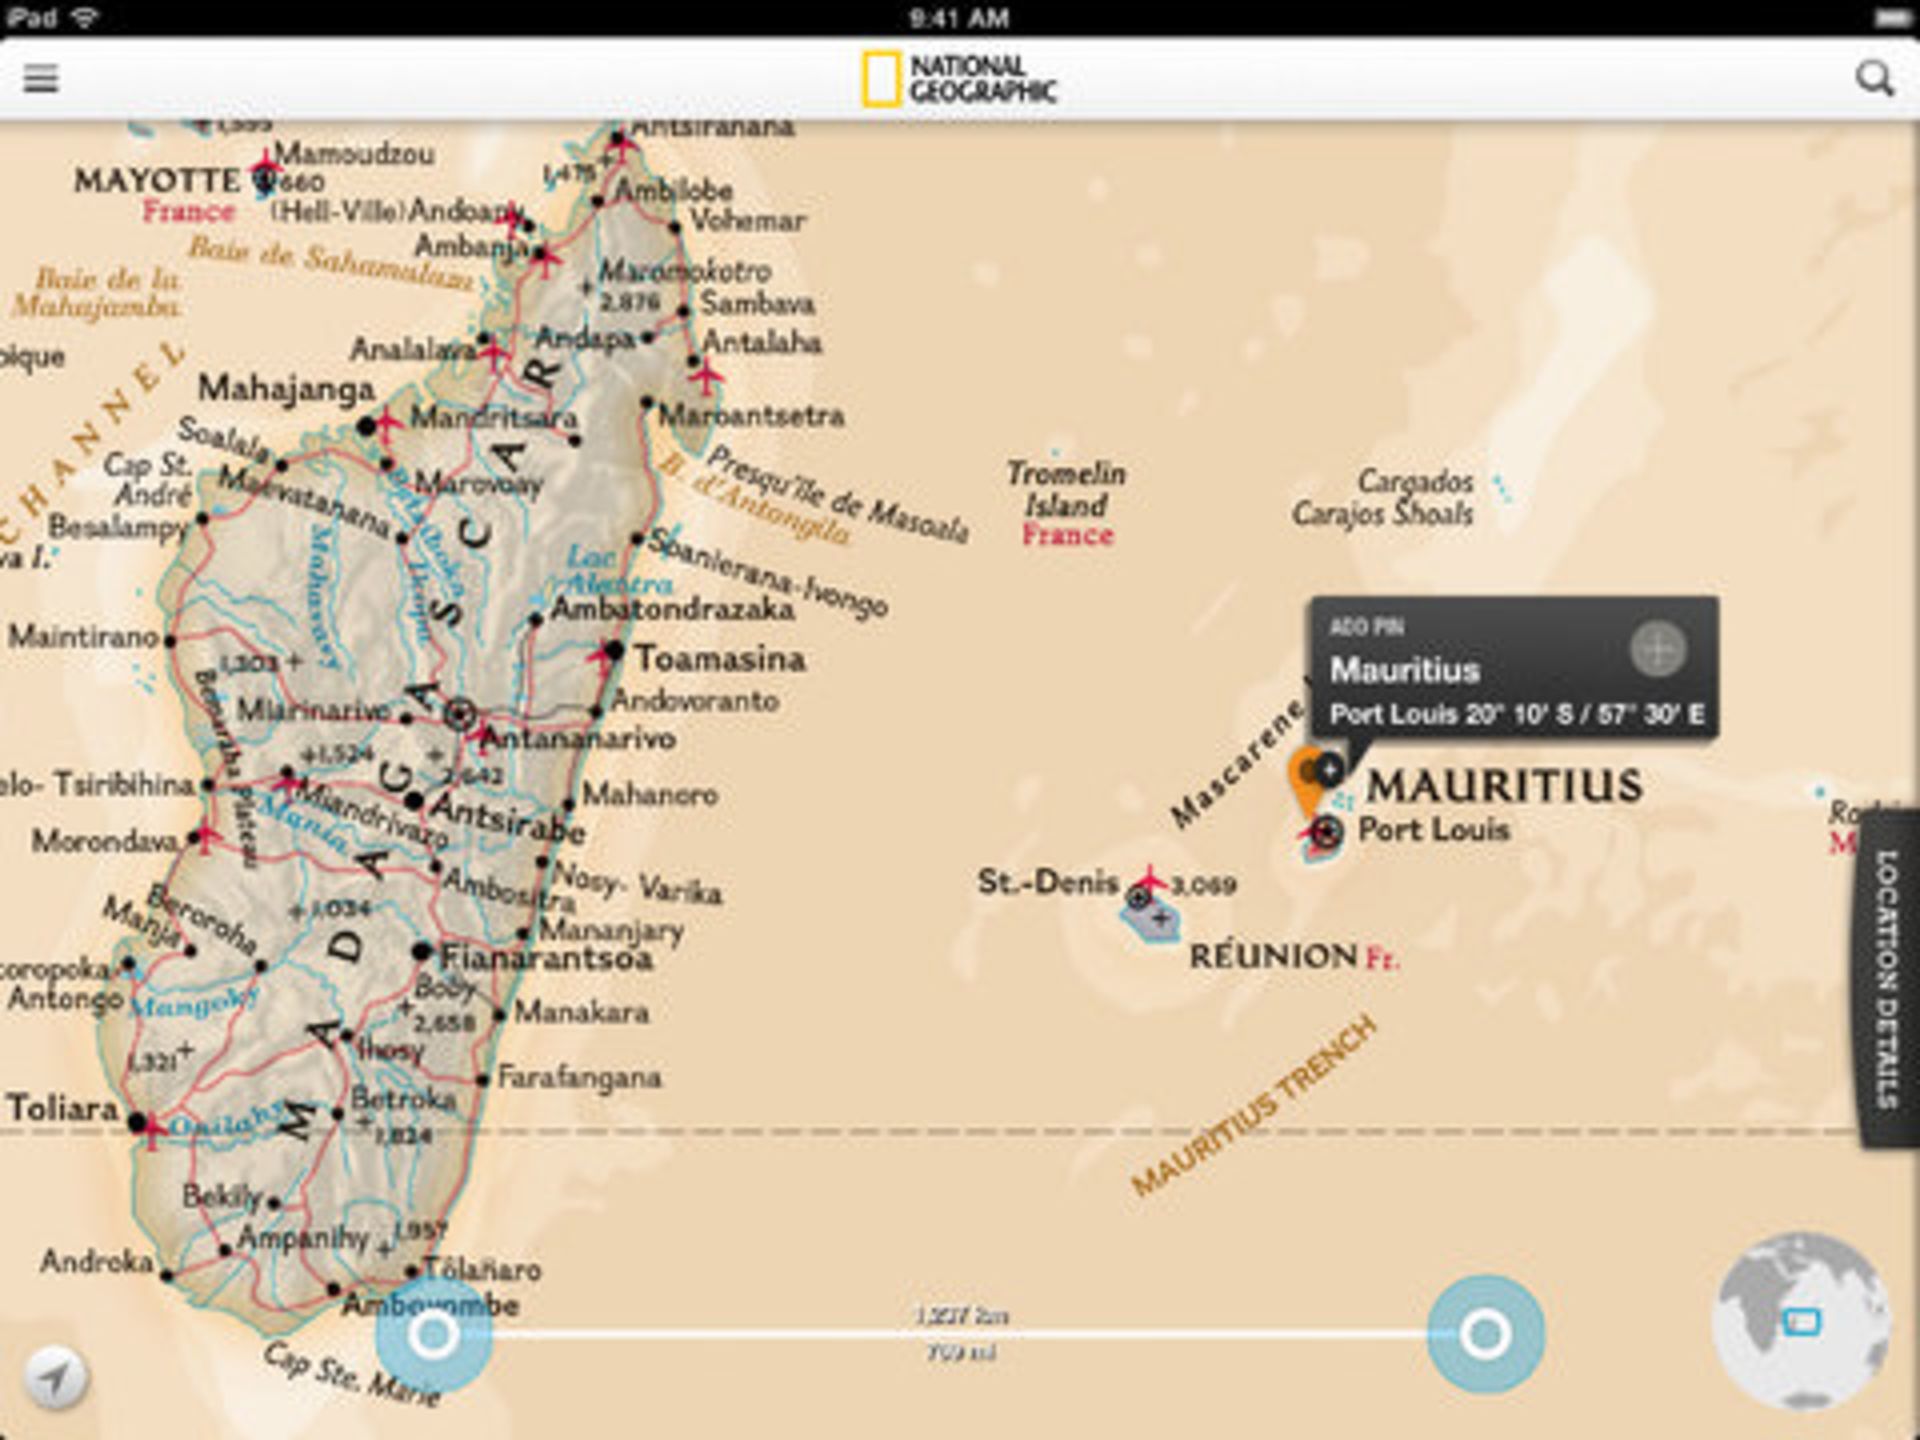 National-Geographic-World-Atlas-3.0.1-for-iOS-iPad-screenshot-002